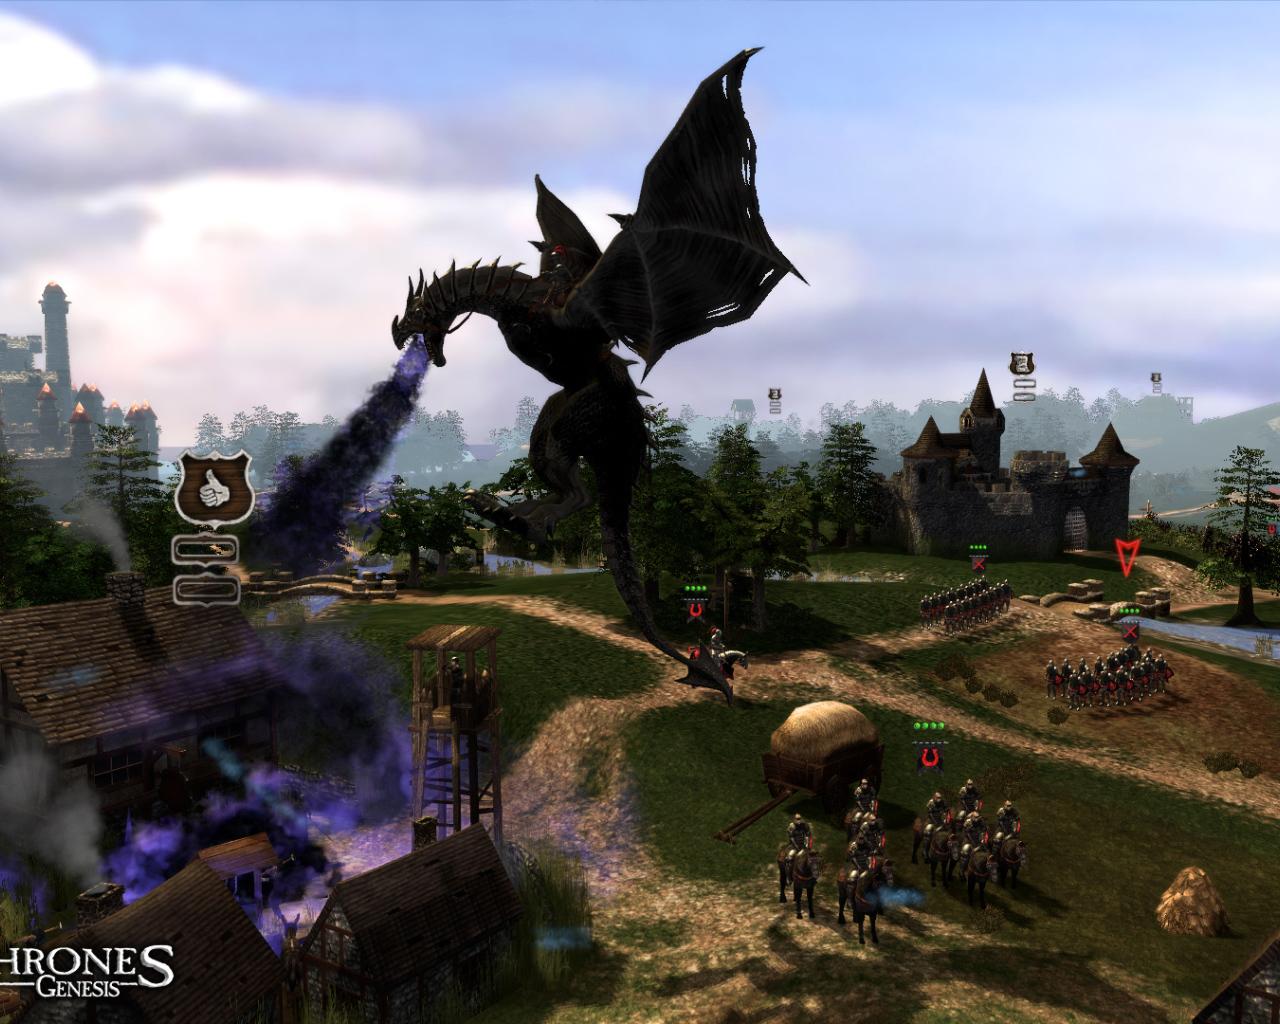 Dragon attacks in the game Game of Thrones Desktop wallpaper